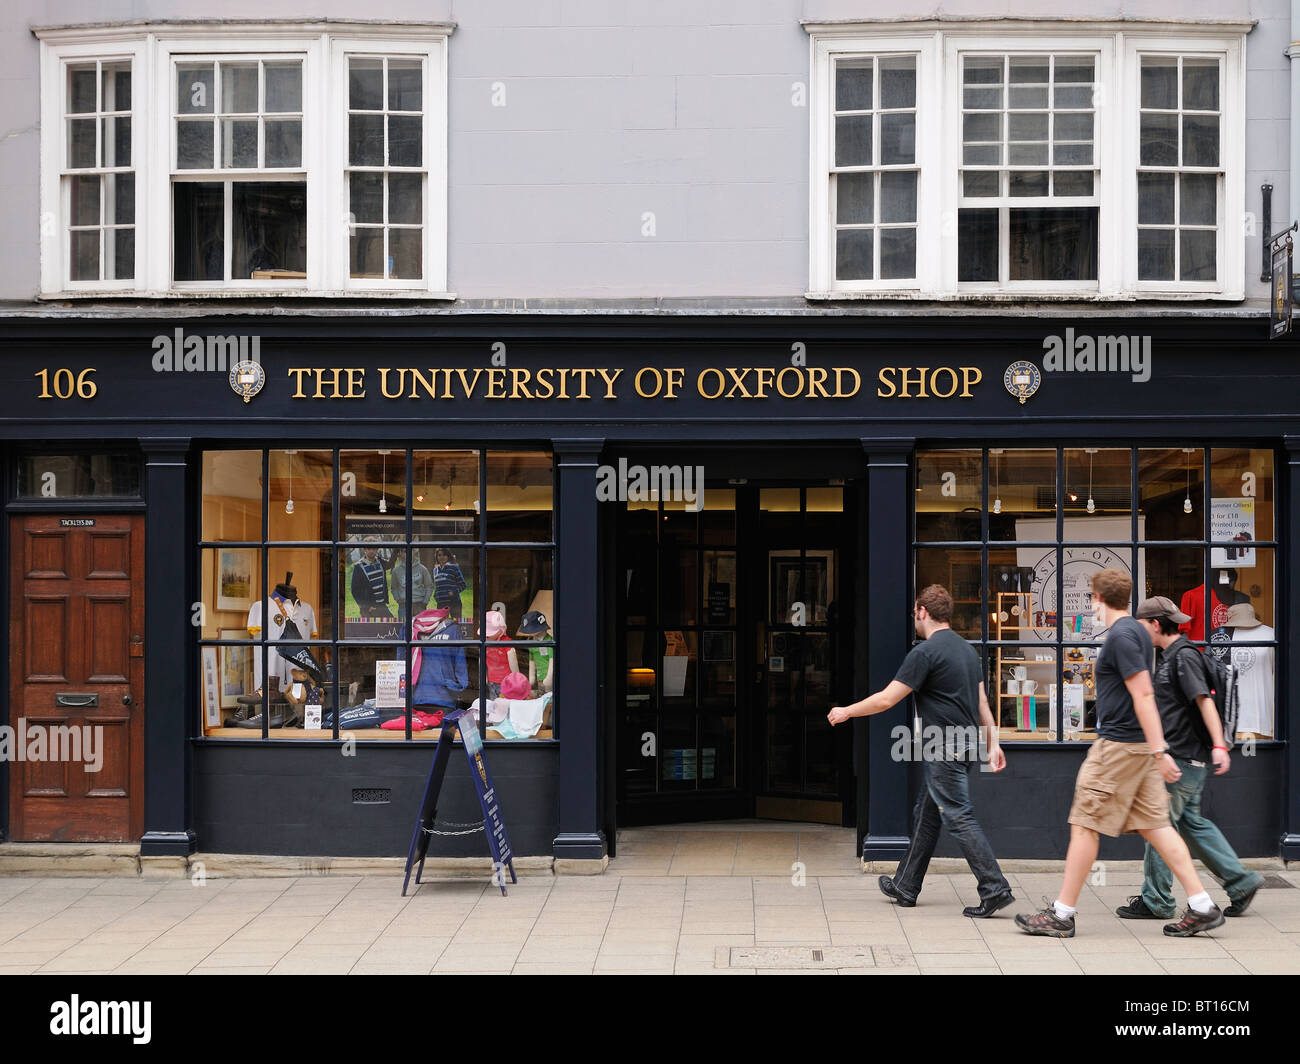 University of Oxford Shop, Oxford, UK. Stock Photo